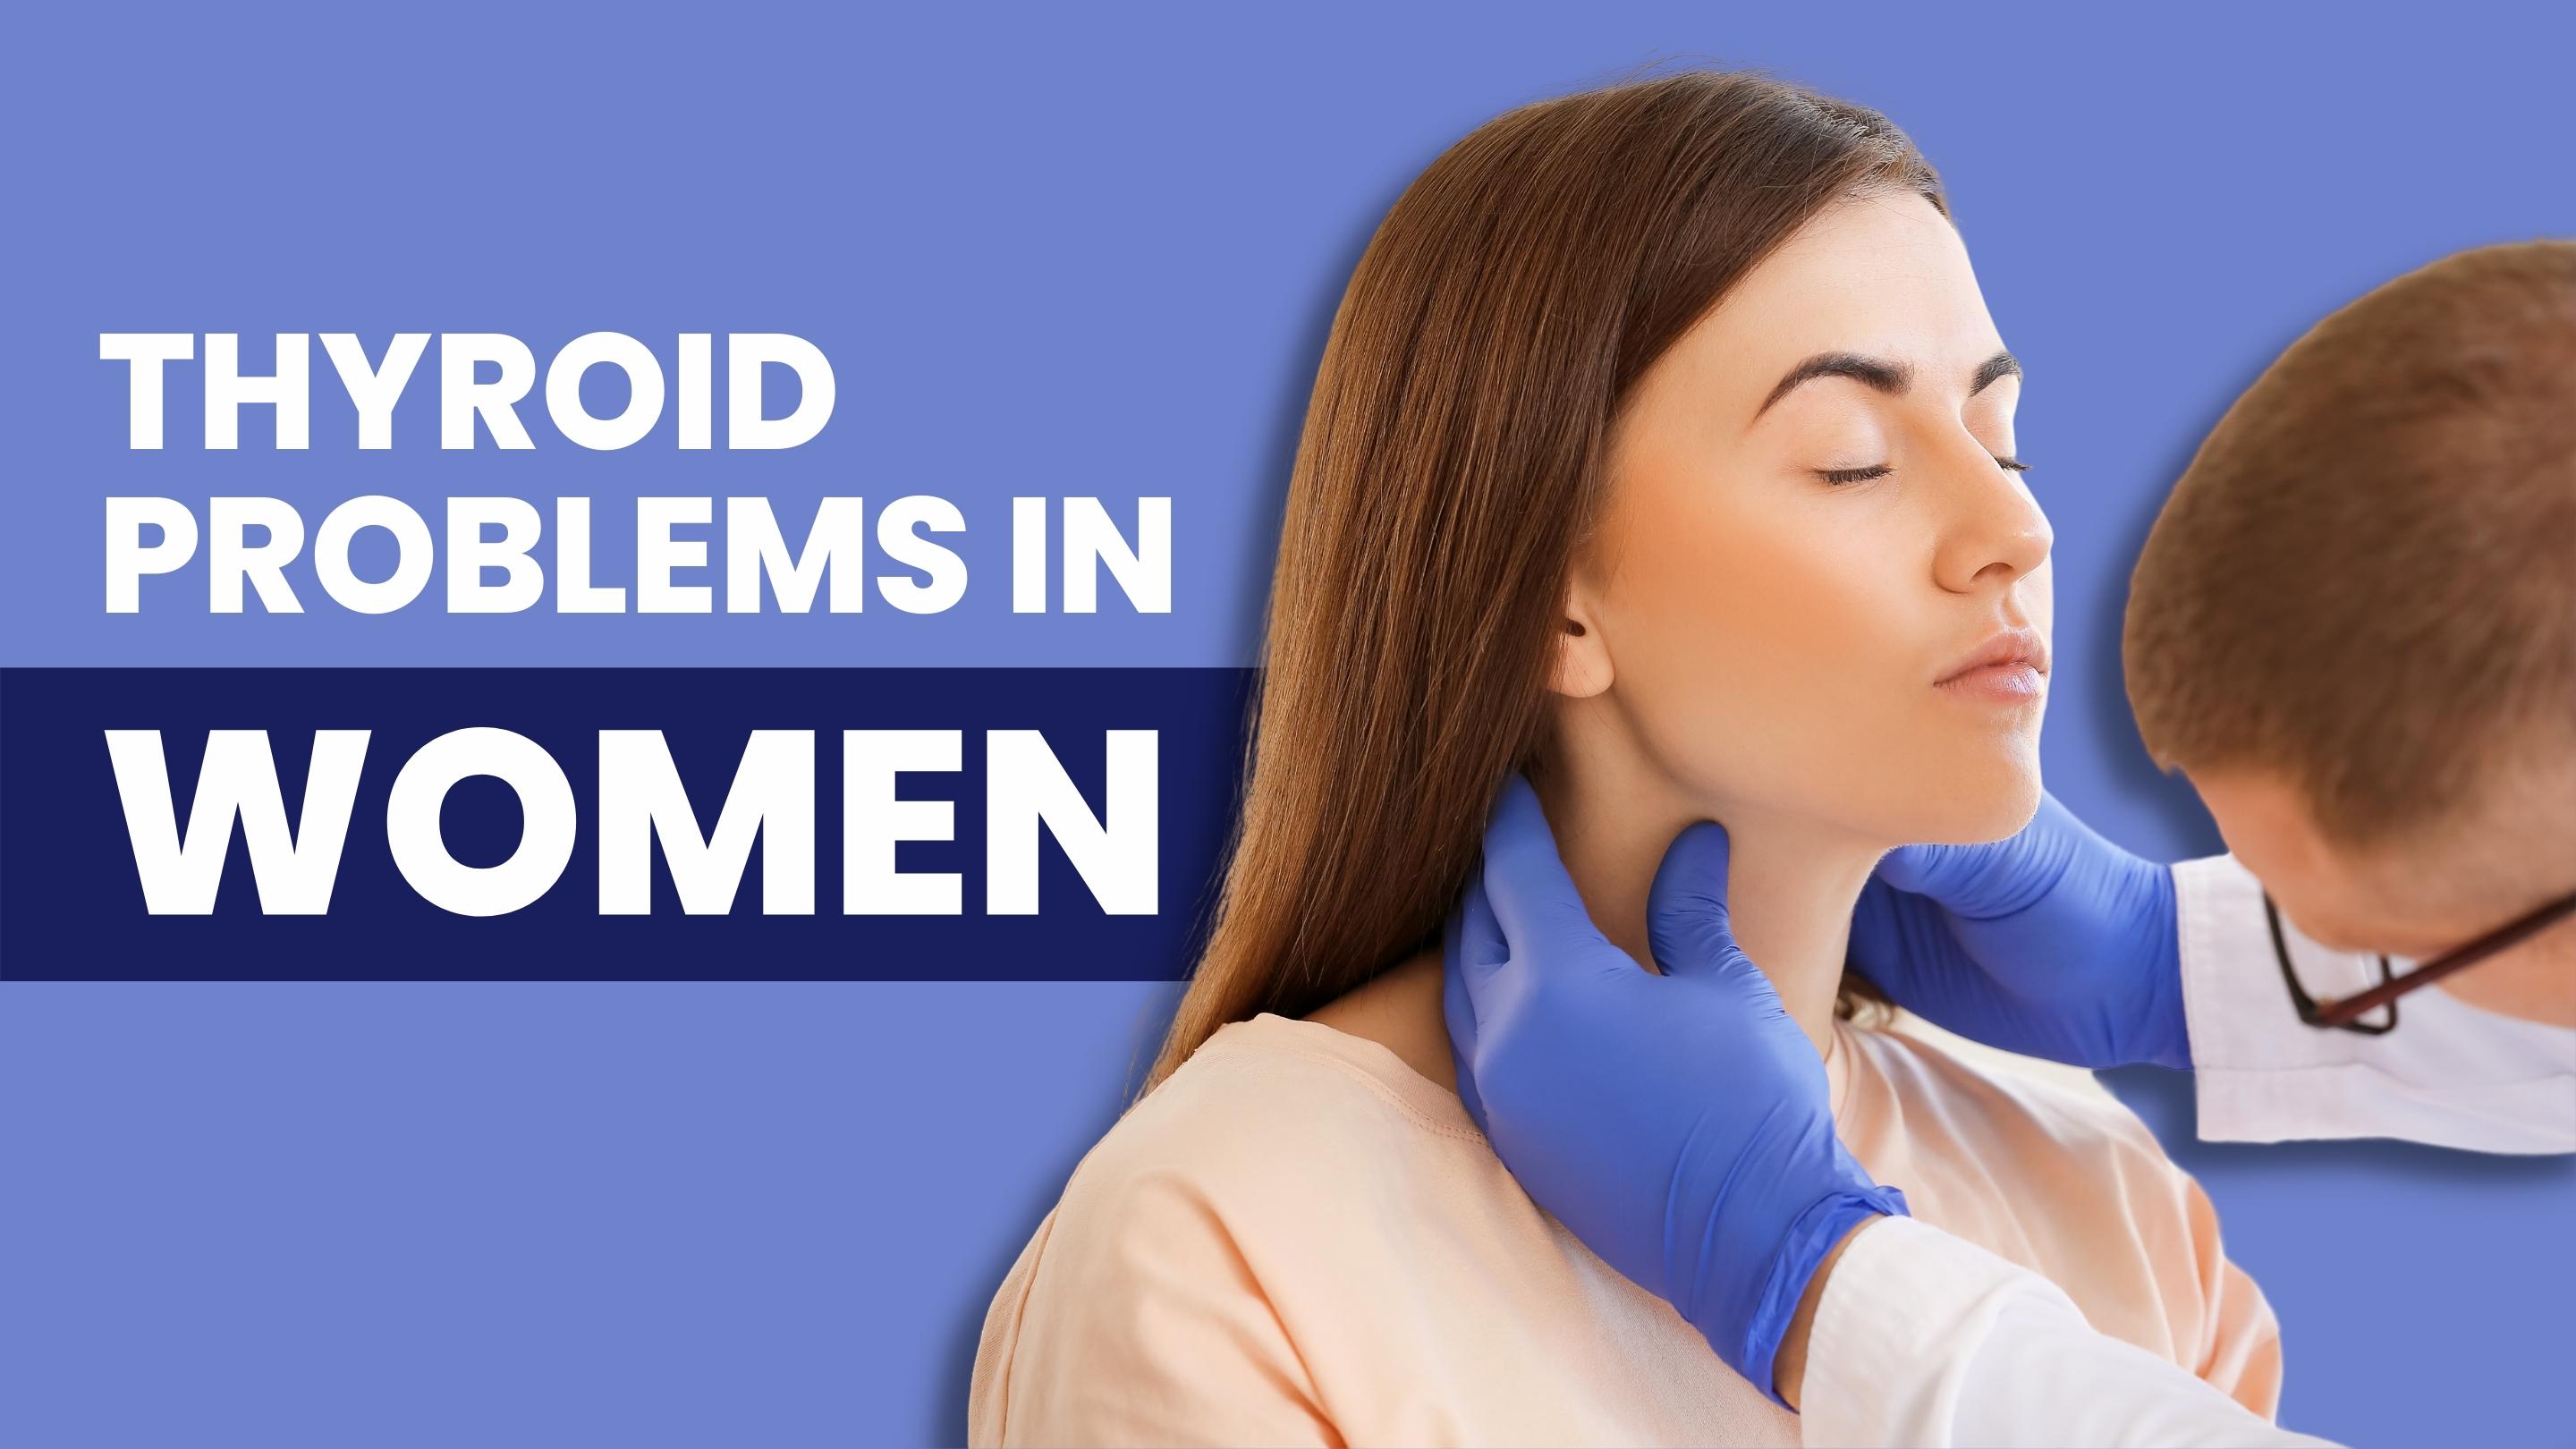 Thyroid problems in women